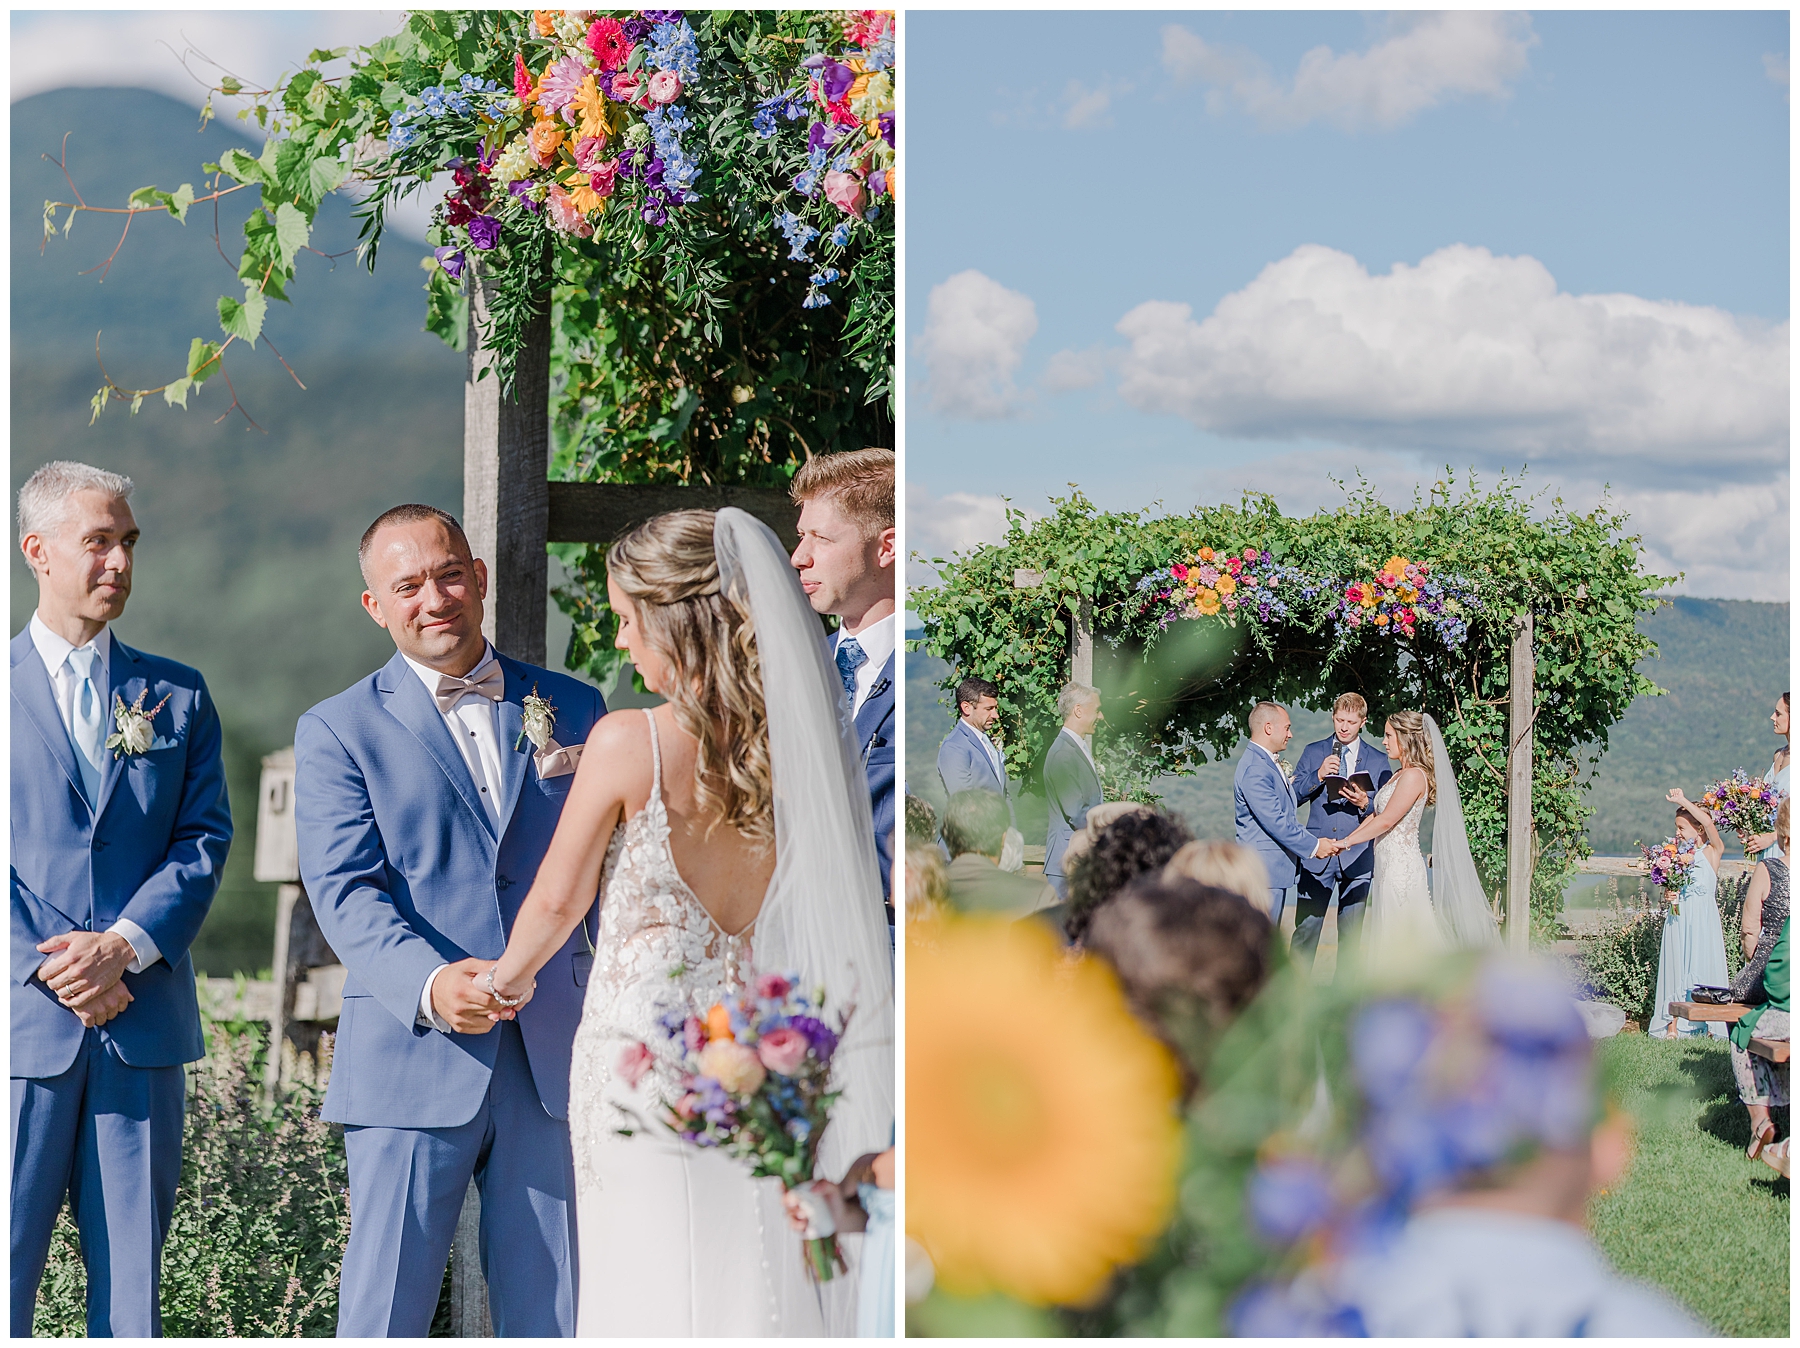 outdoor scenic vermont wedding ceremony at Mountain Top Inn & Resort